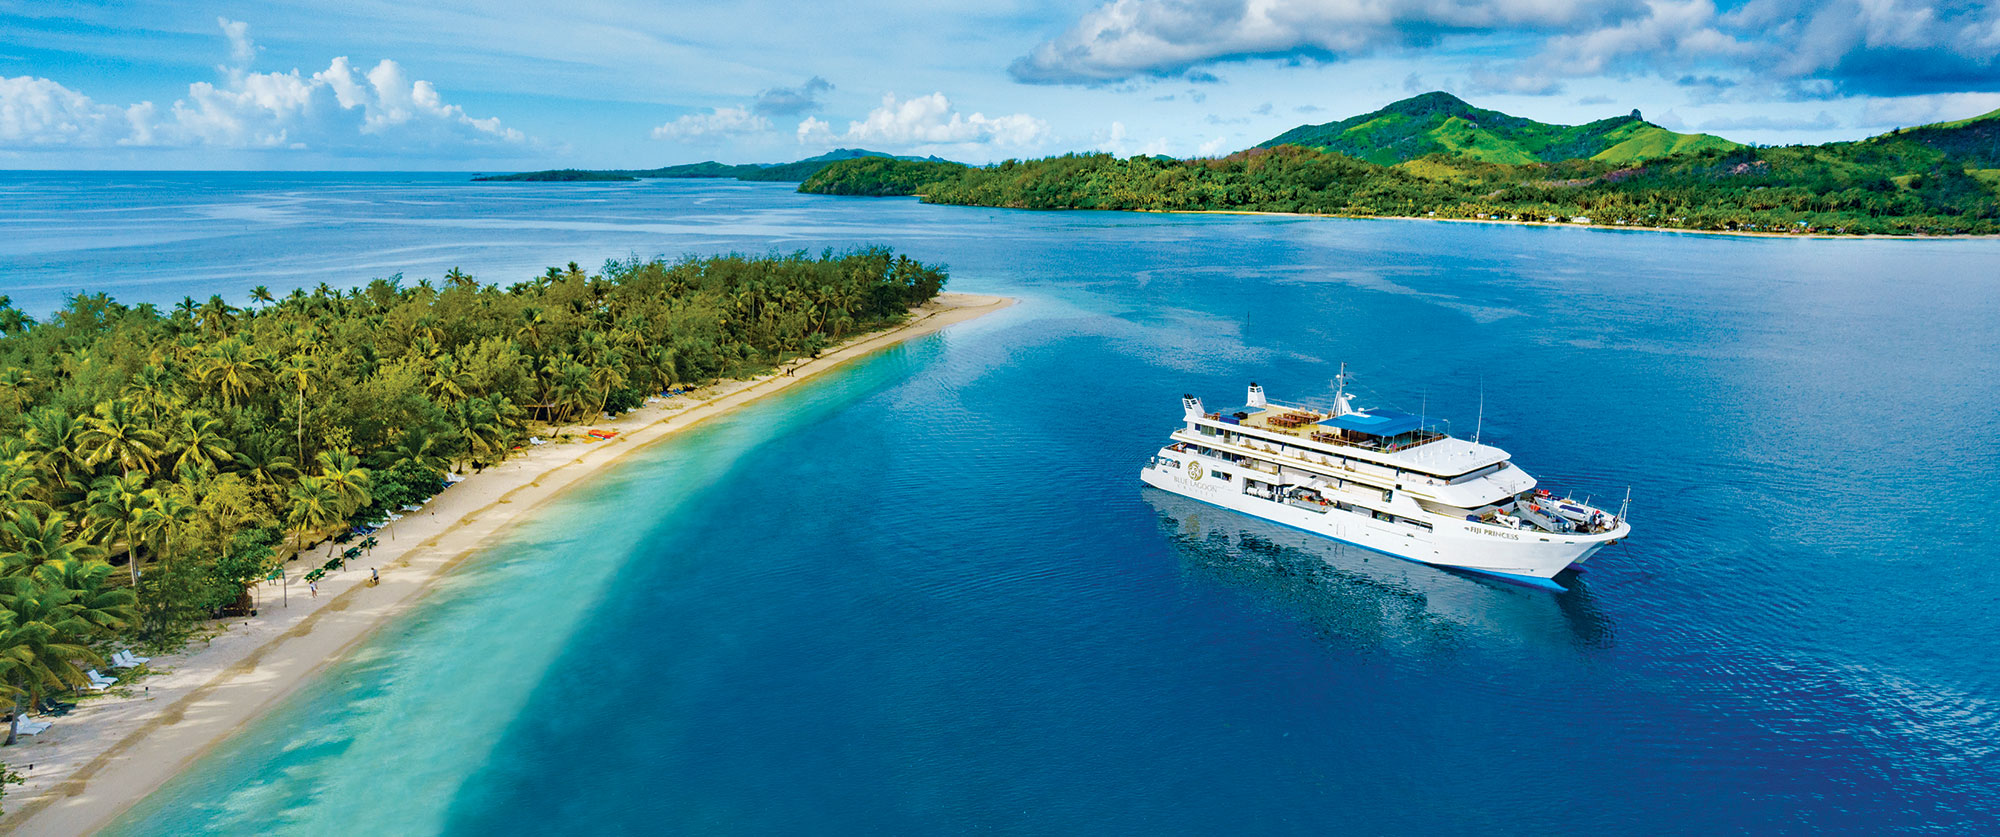 Fiji Cruise Vacation: Fiji Highlights Cruise and Resort Package